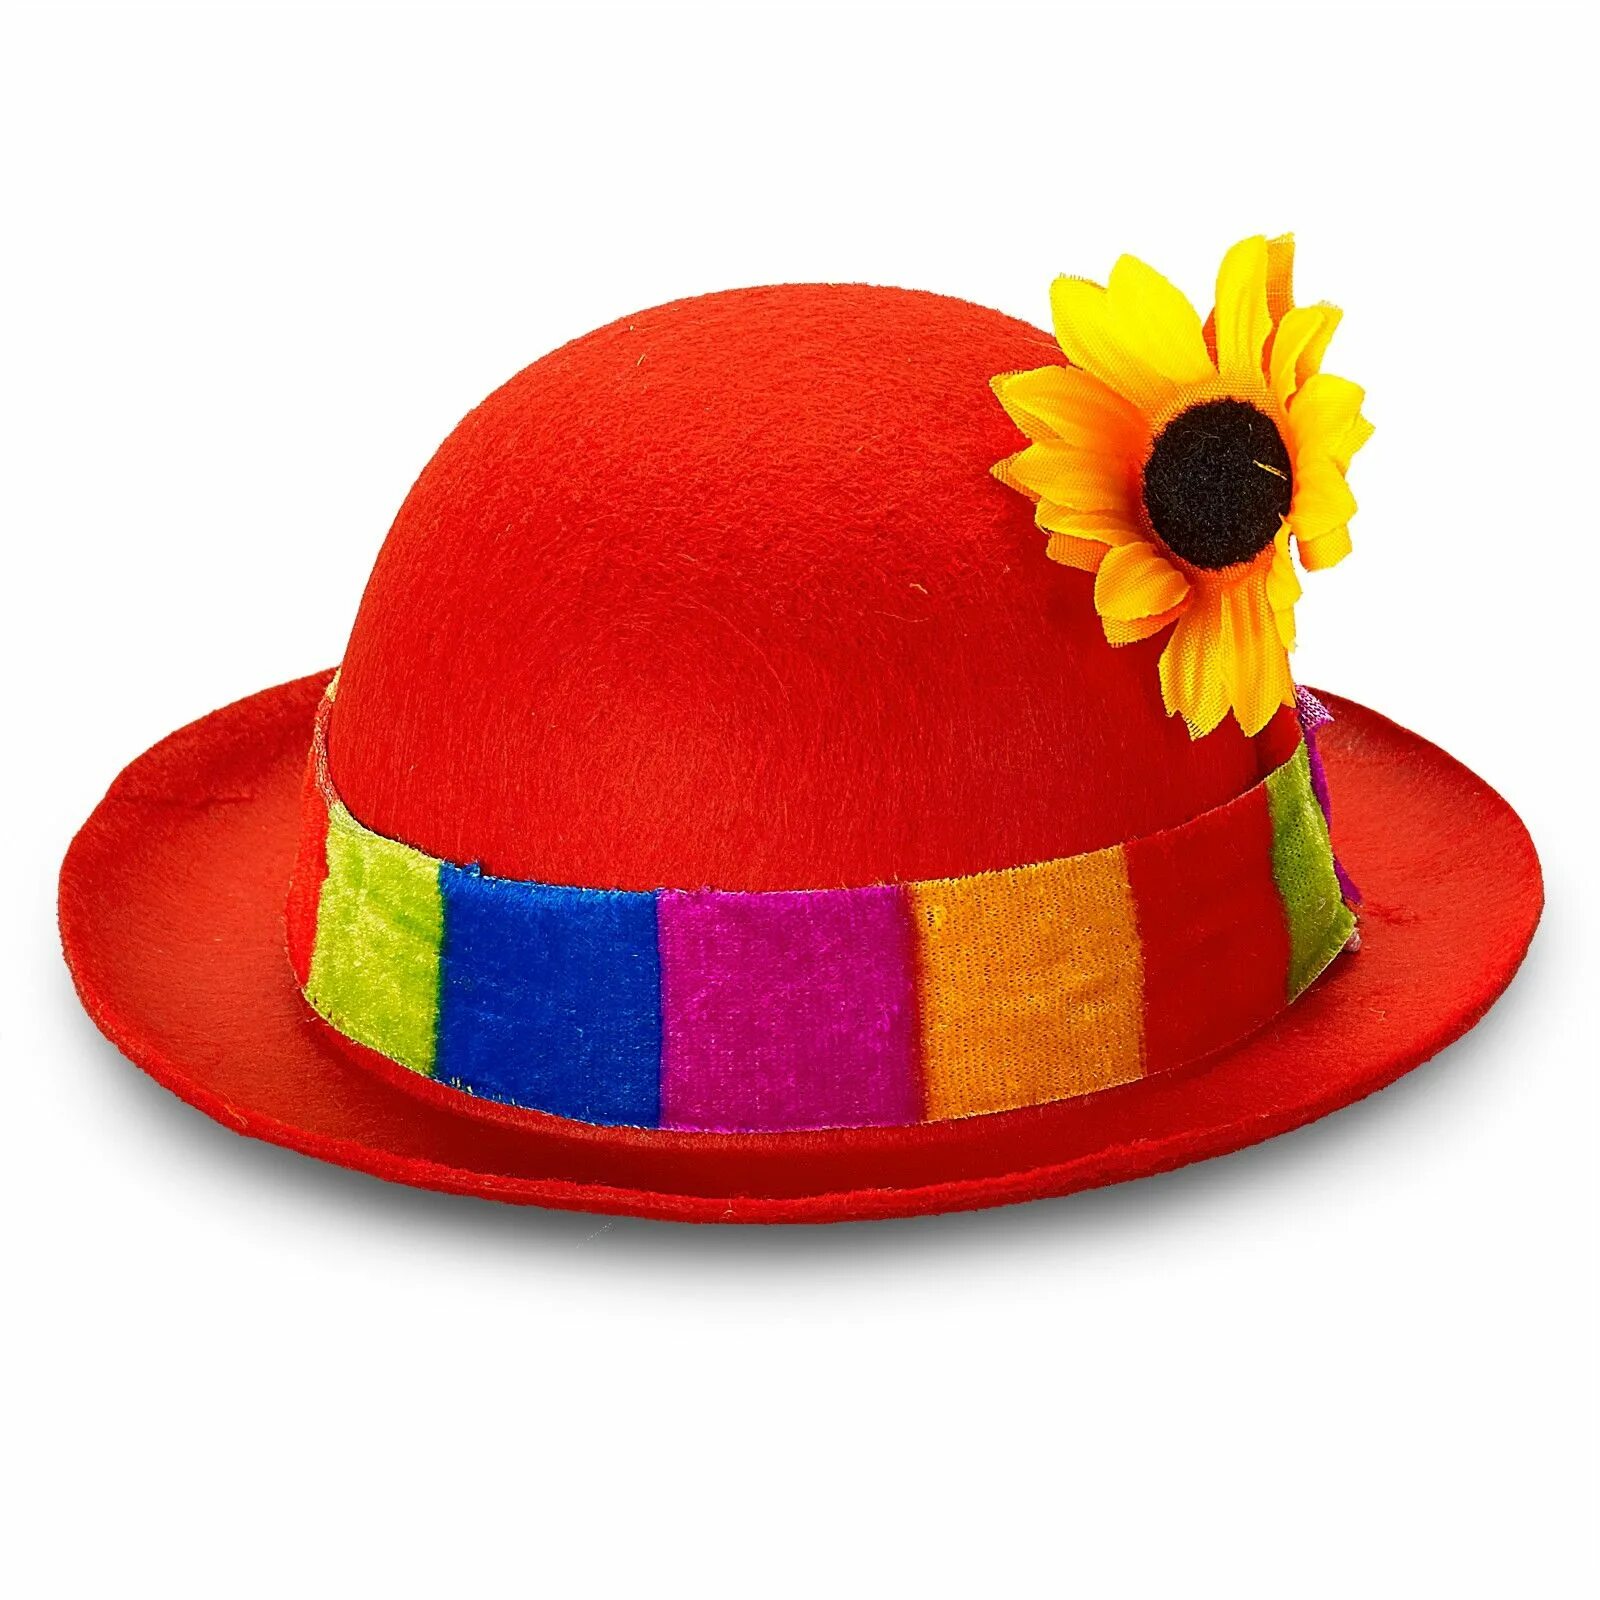 Hat gekauft. Шляпа для детей. Цветные шляпы. Яркие шляпы. Шляпа клоуна.